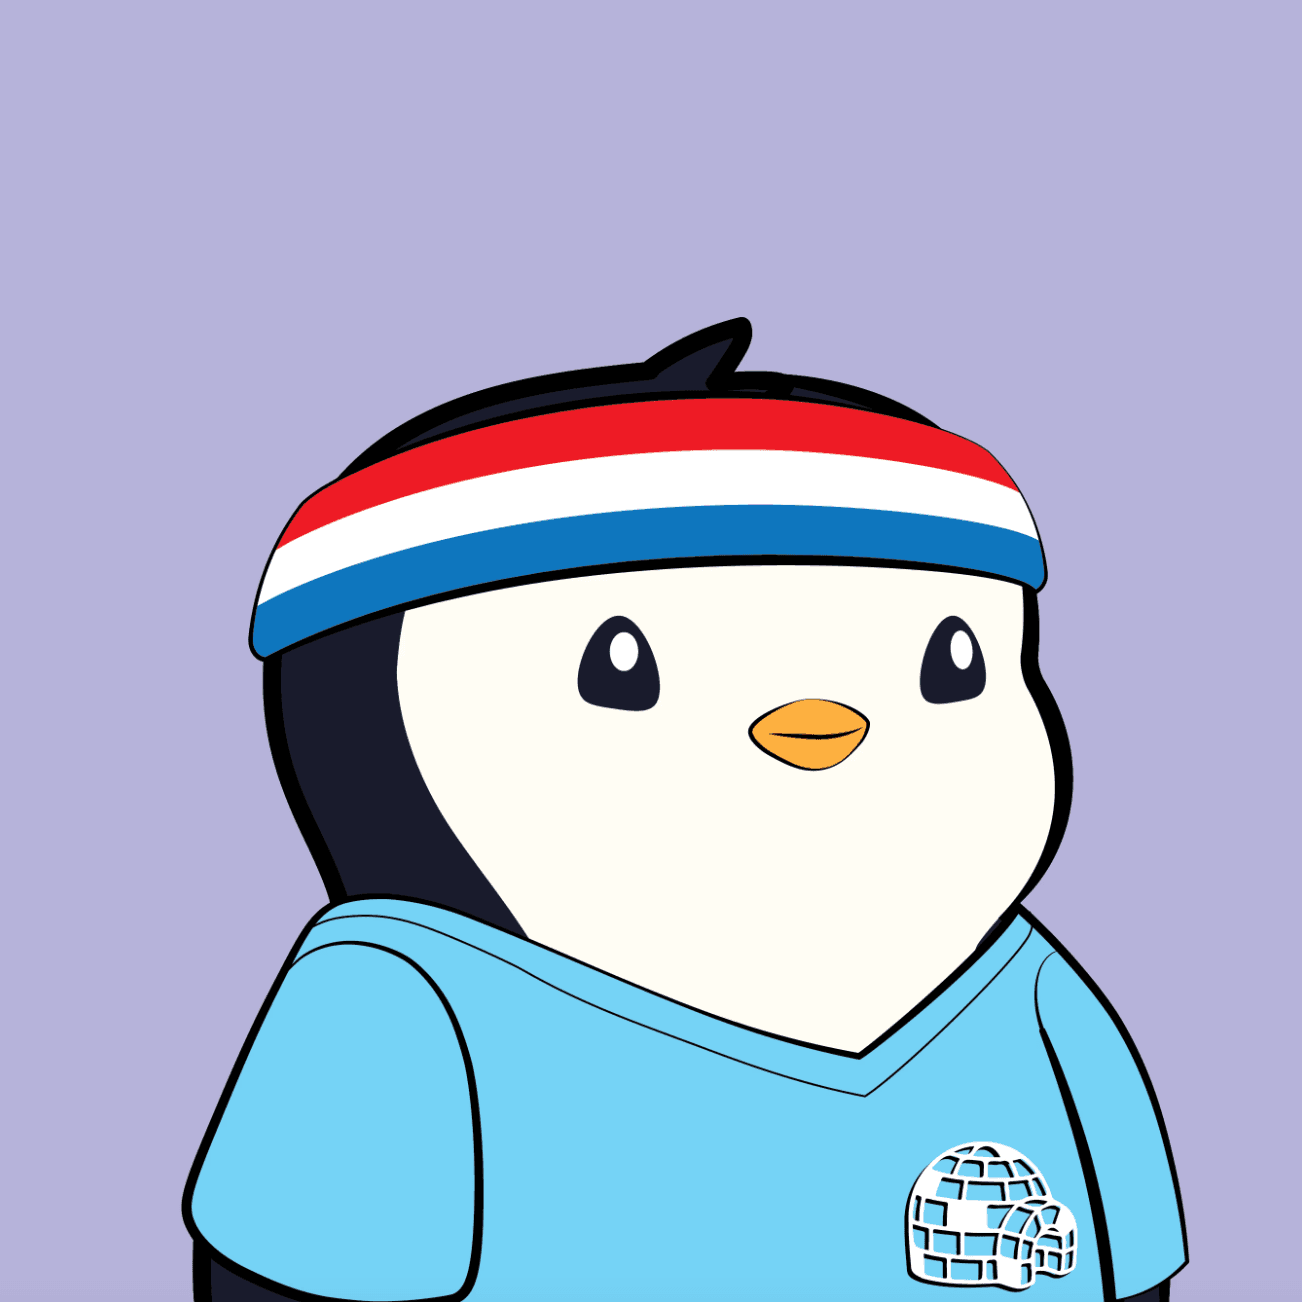 Pudgy Penguin